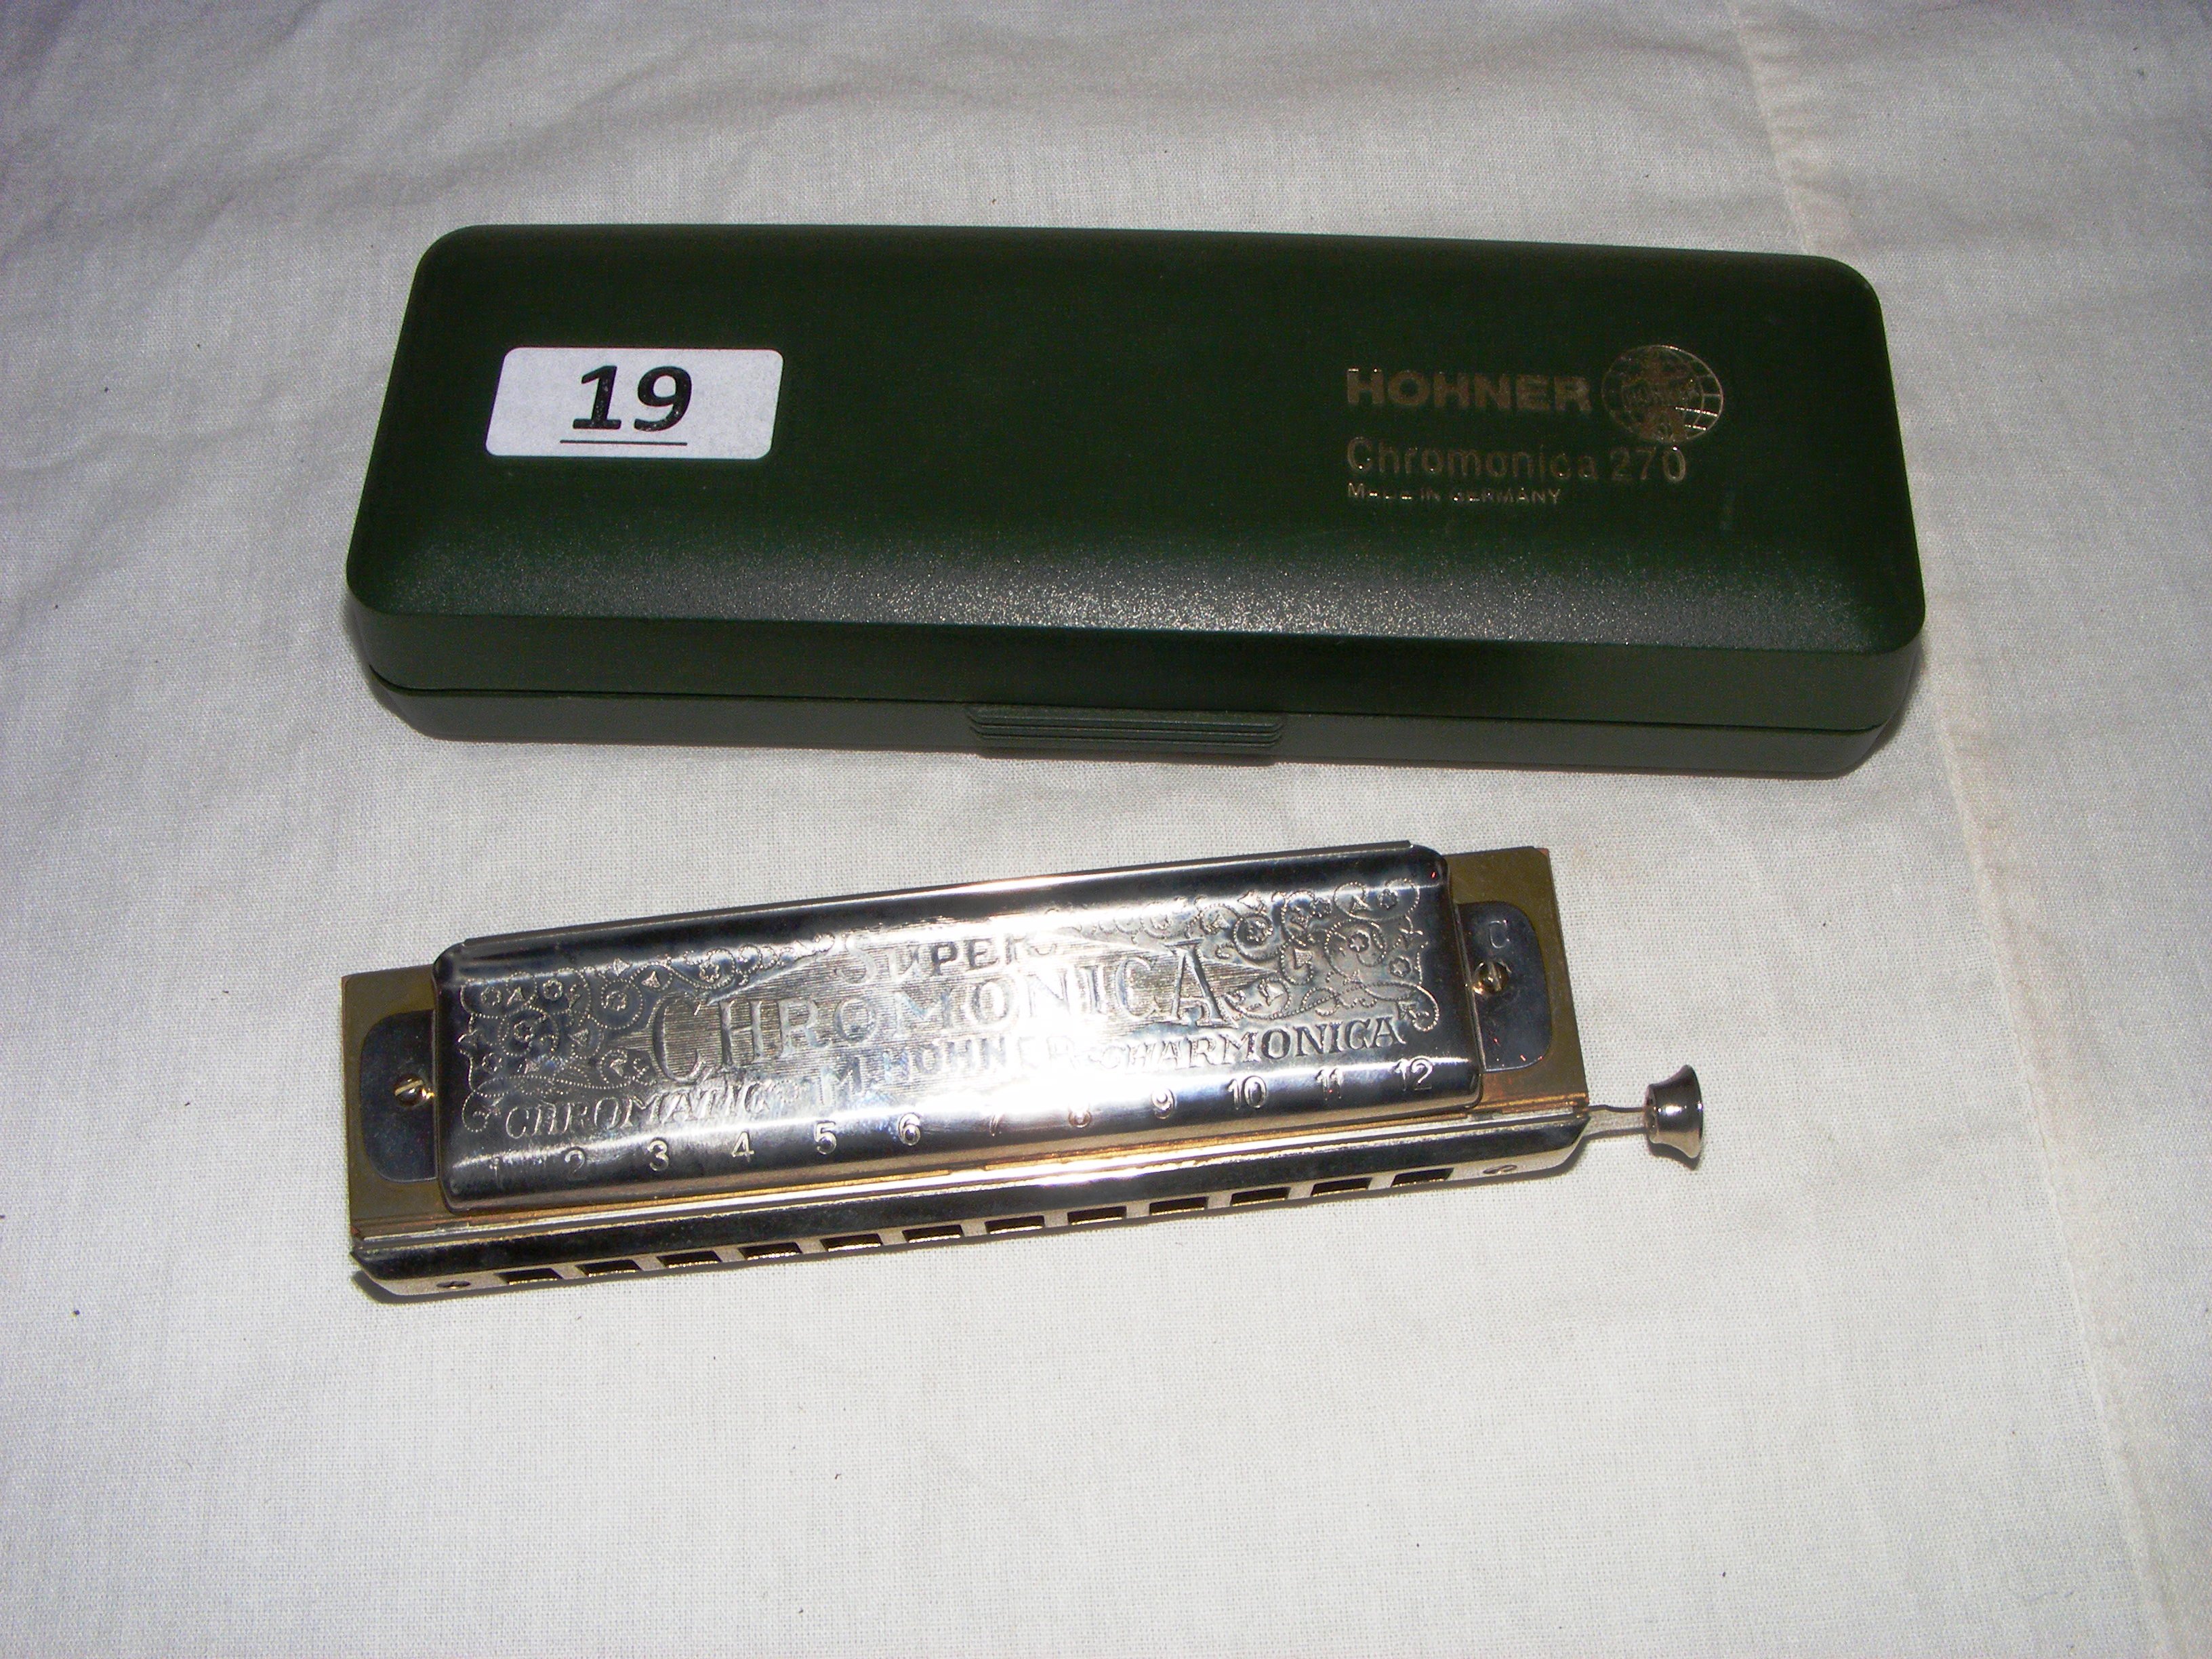 A Hohner, 270 Super Chromonica, harmonica in original box.